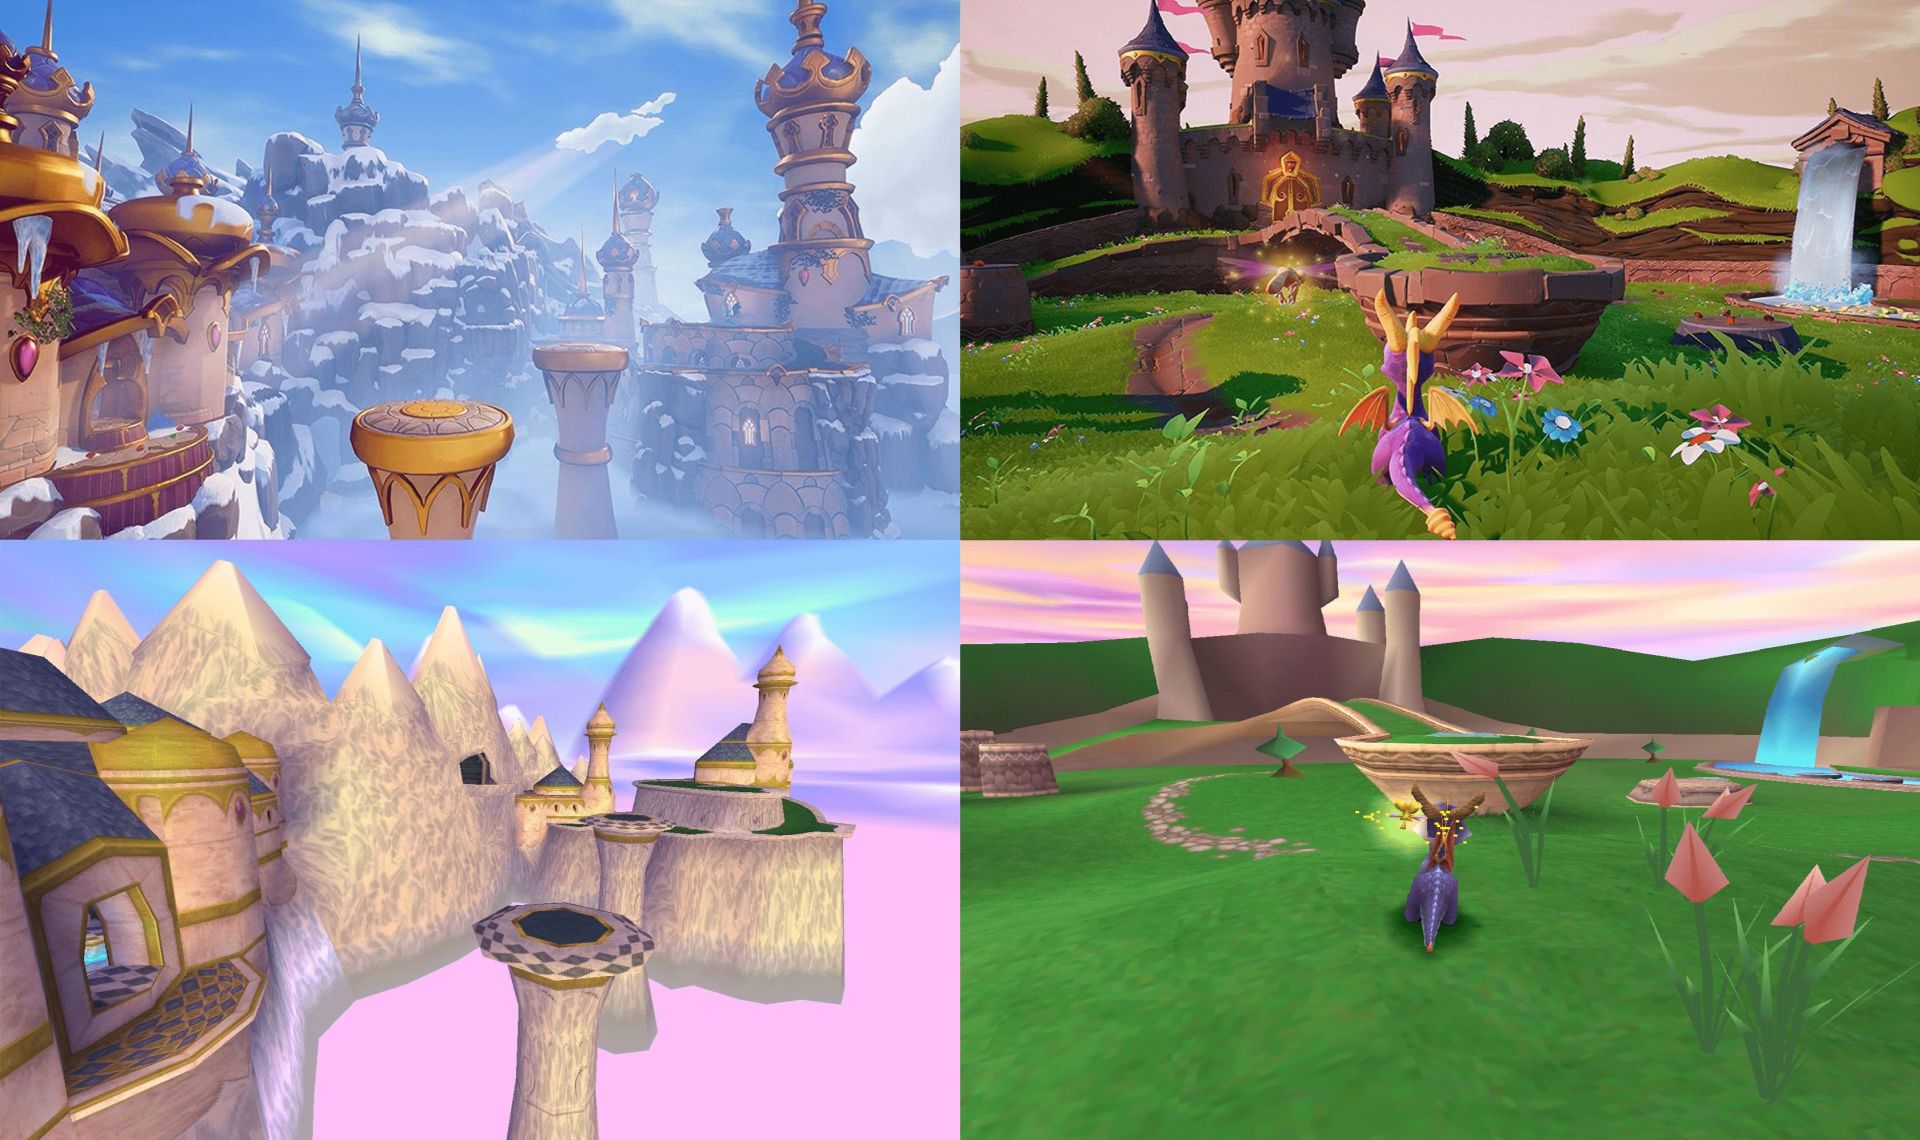 Spyro-Reignited-Trilogy-comparison-shots.jpg